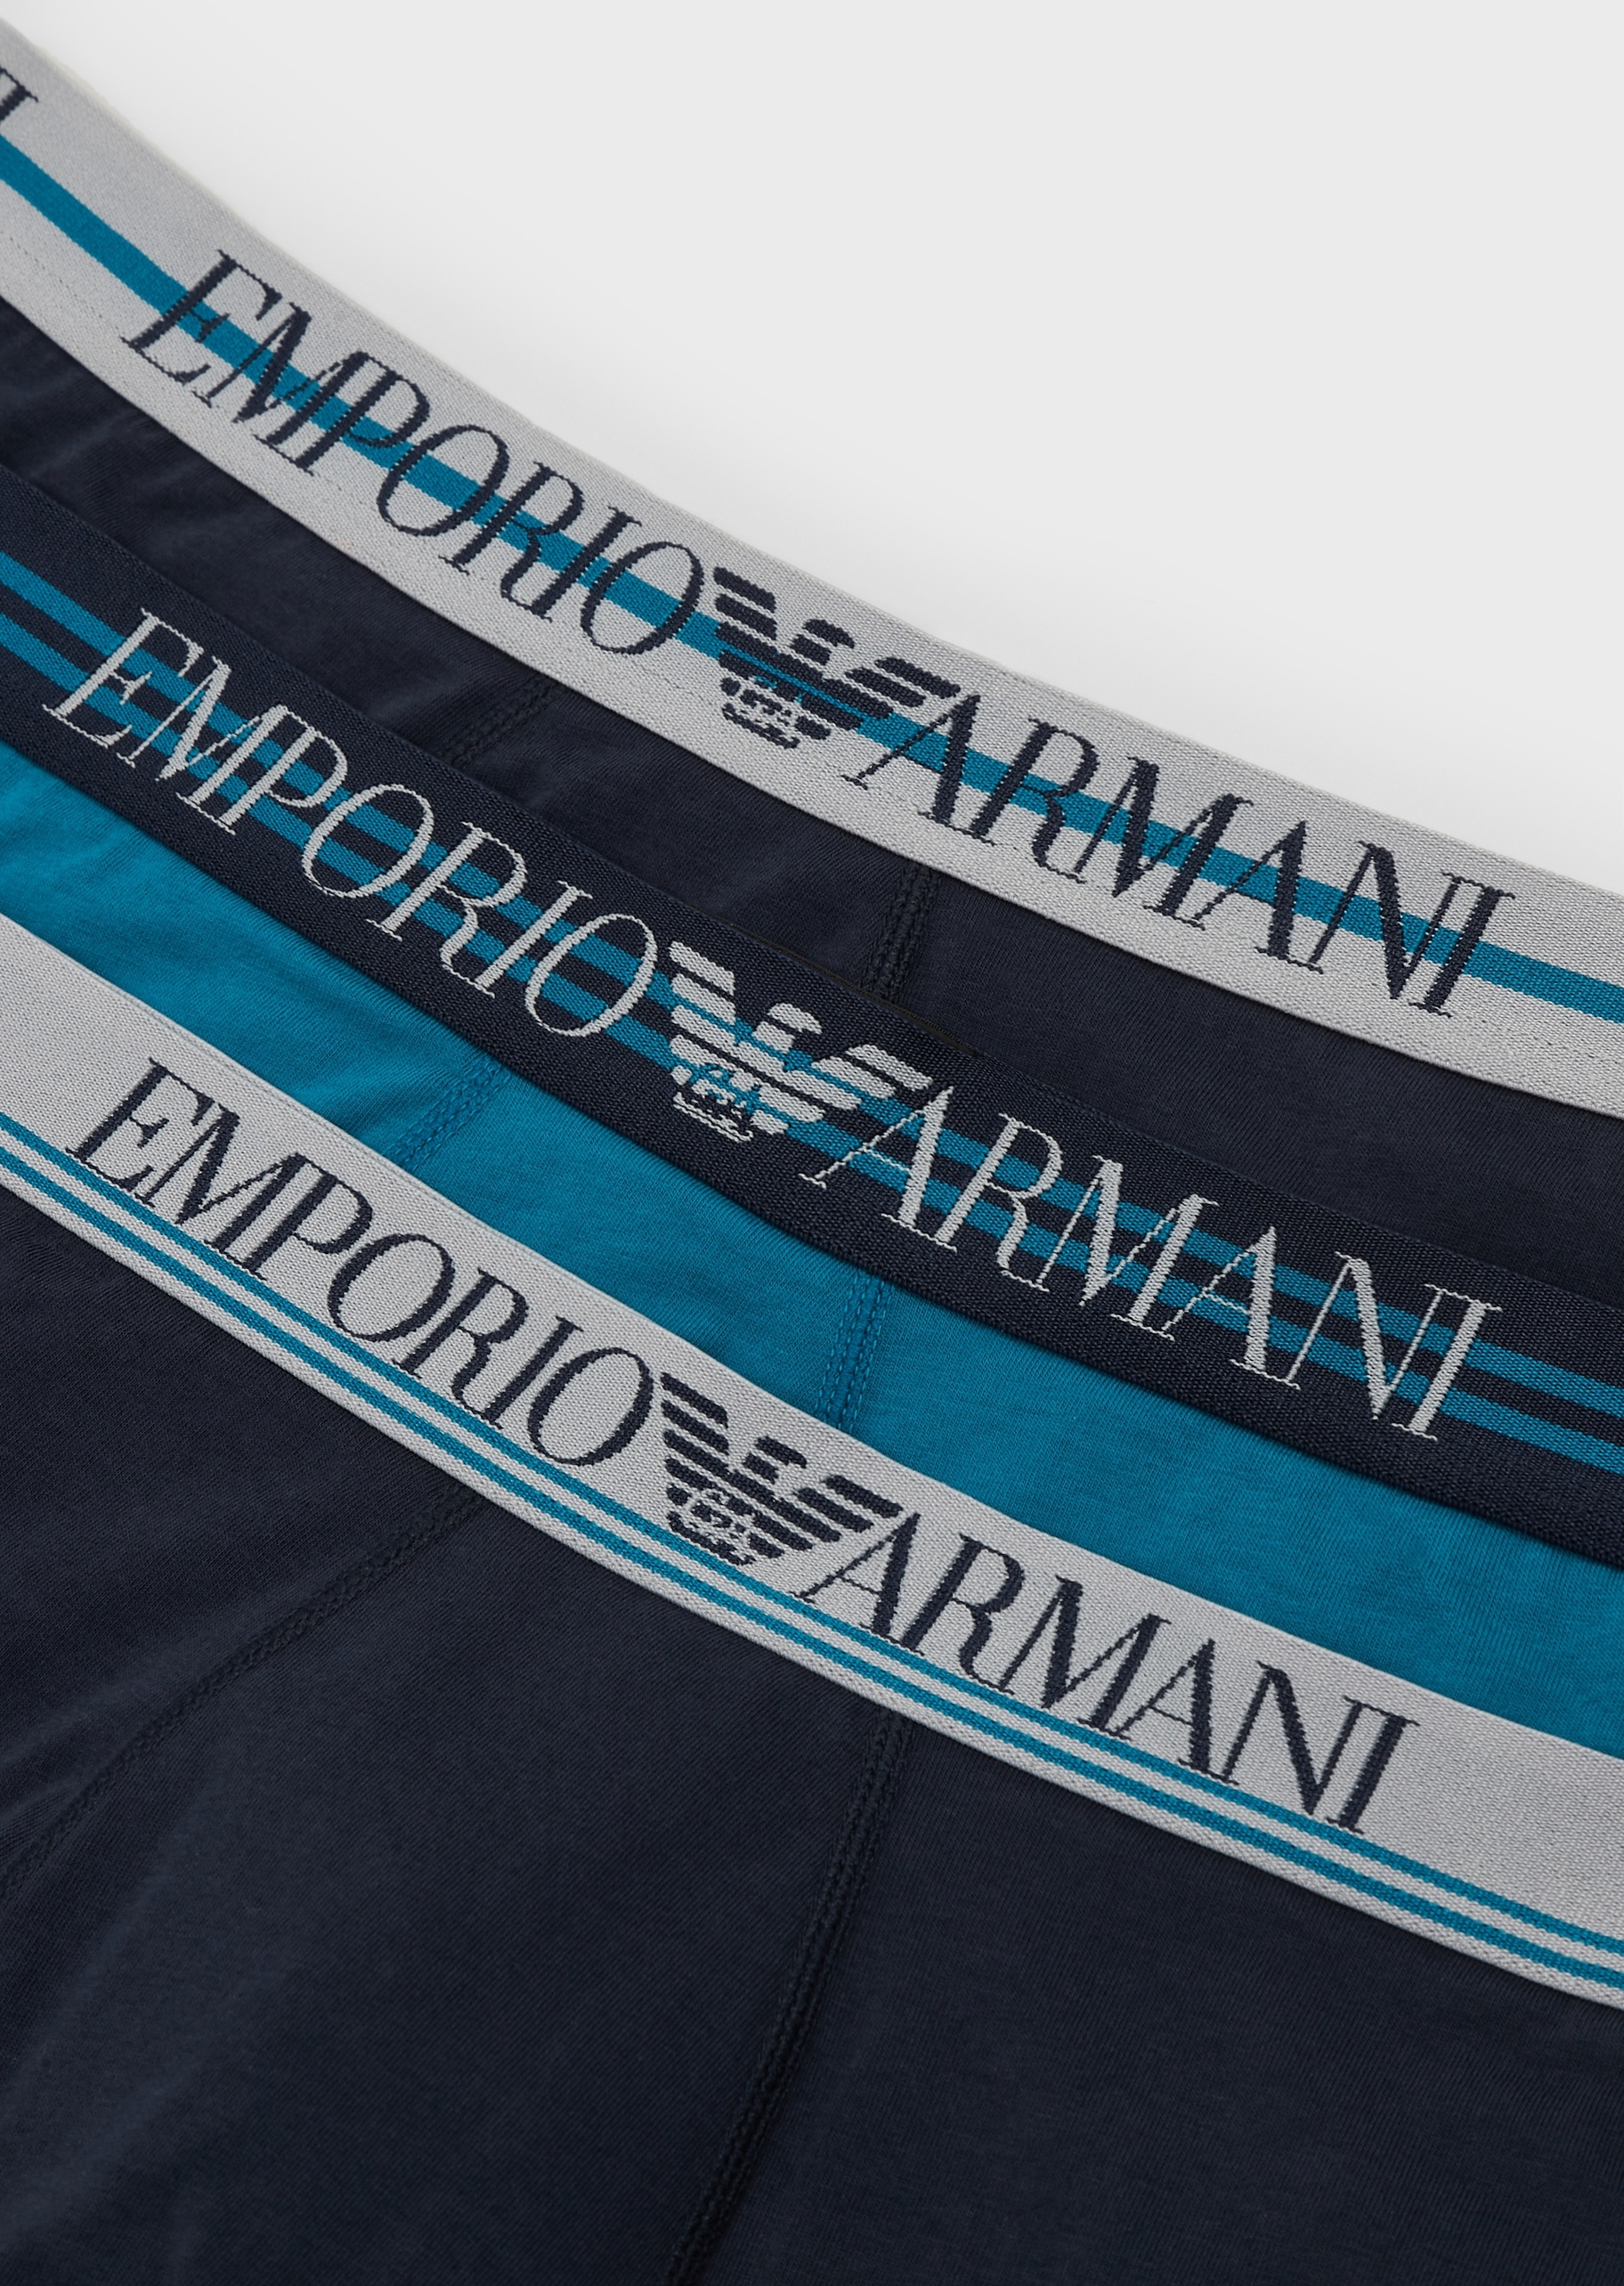 Emporio Armani 经典徽标内裤套装